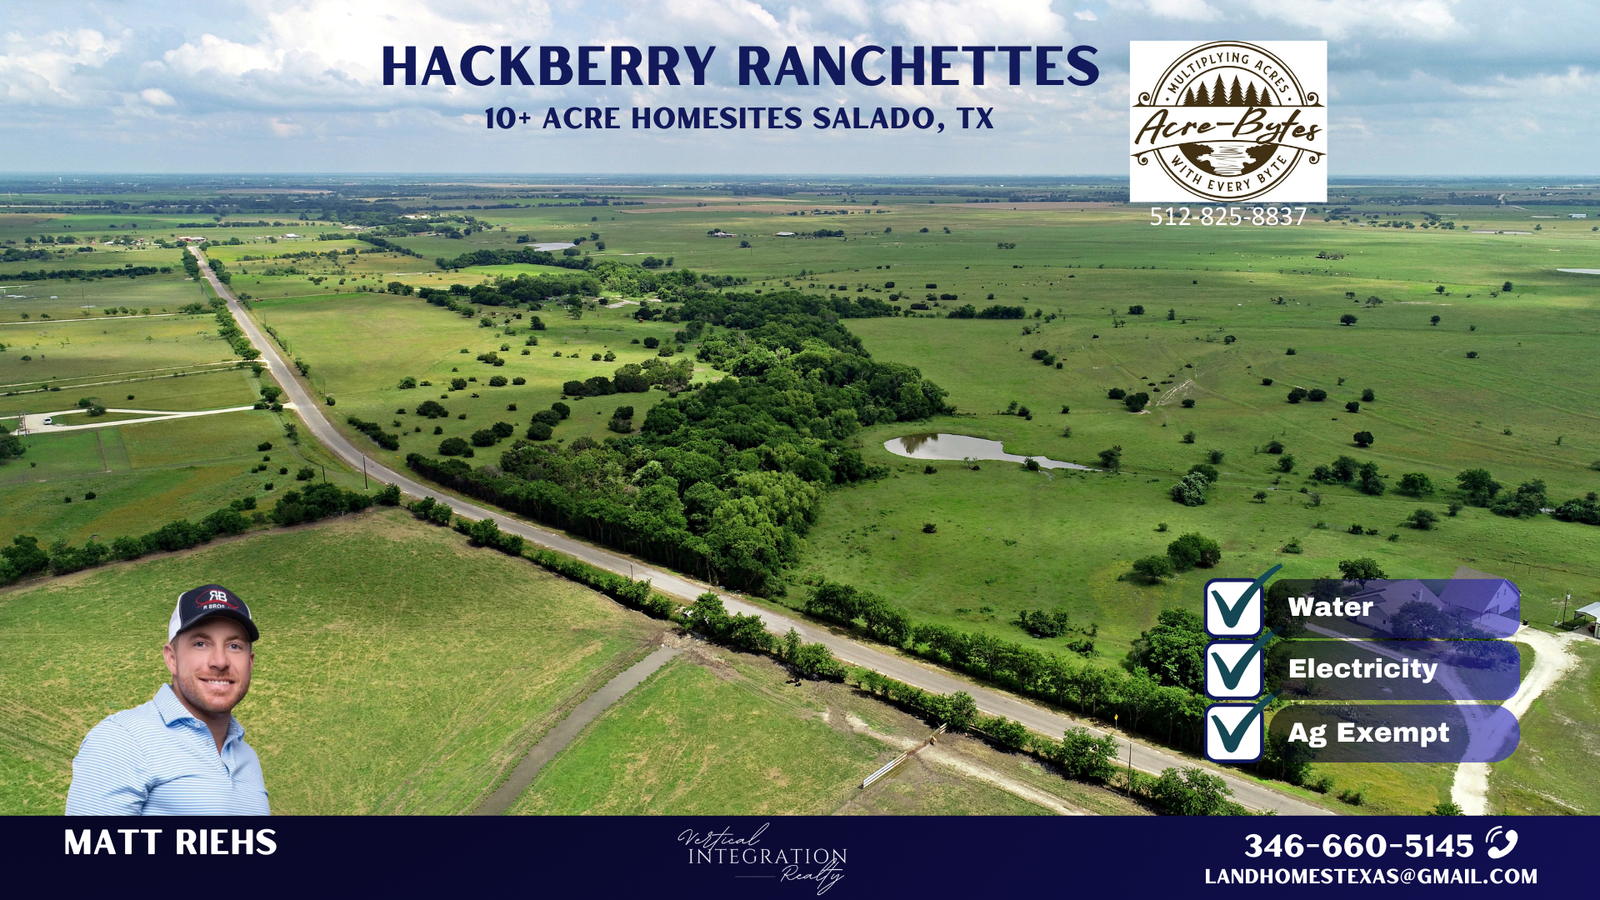 Hackberry Ranchettes